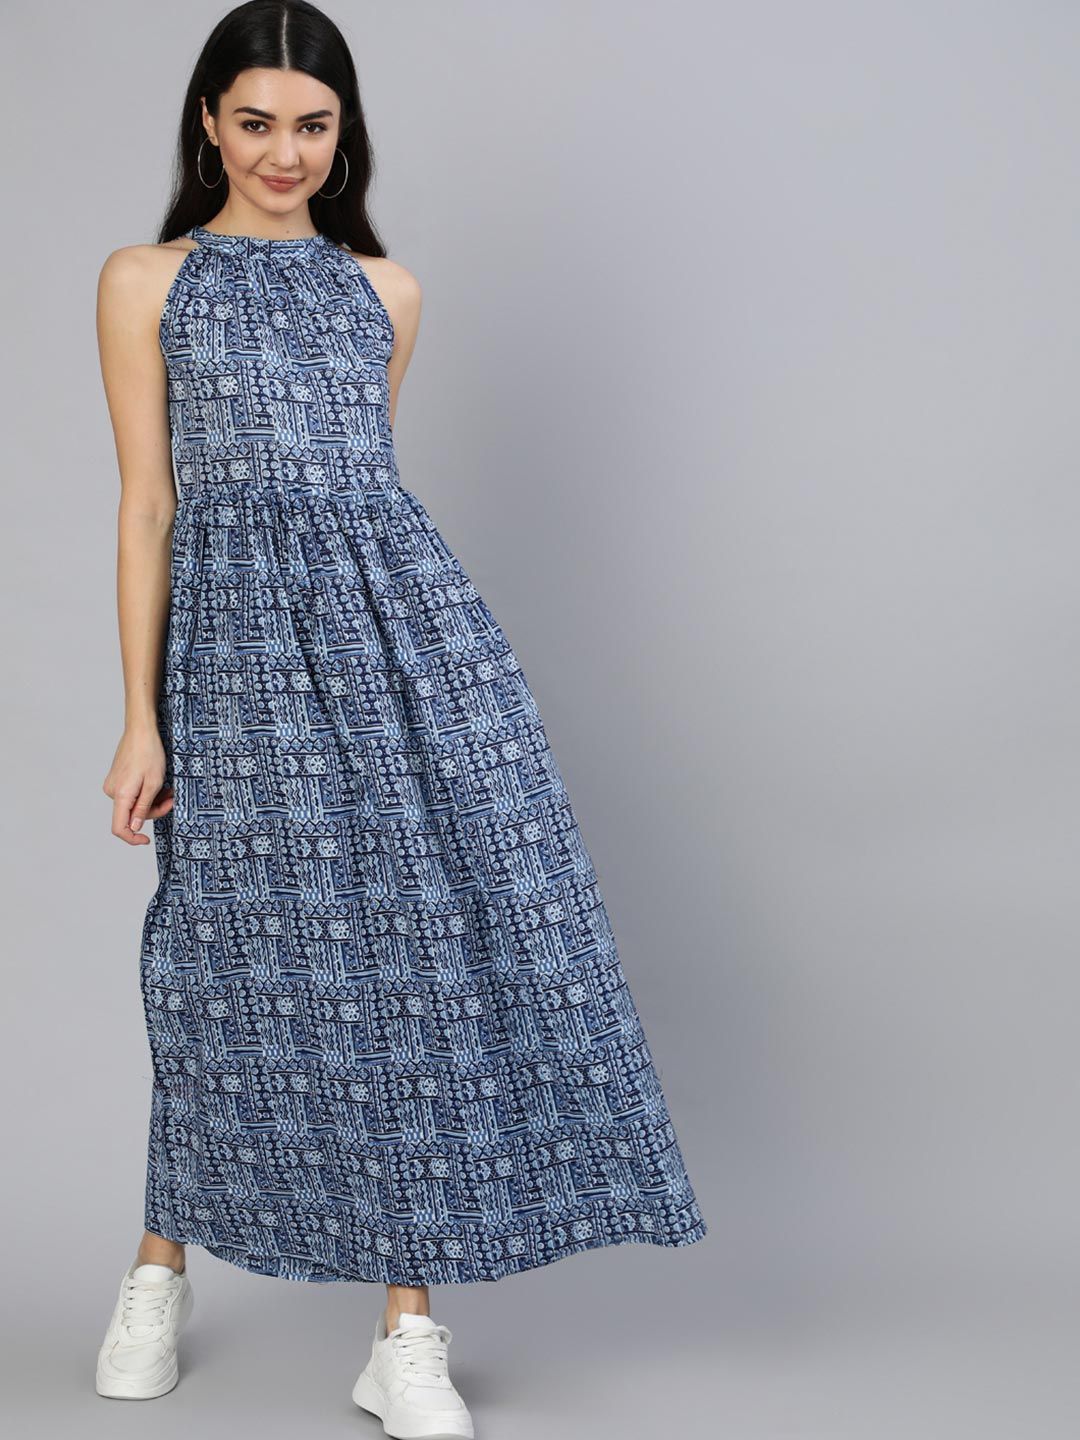 Nayo Blue Ethnic Motifs Crepe Cotton Maxi Dress Price in India